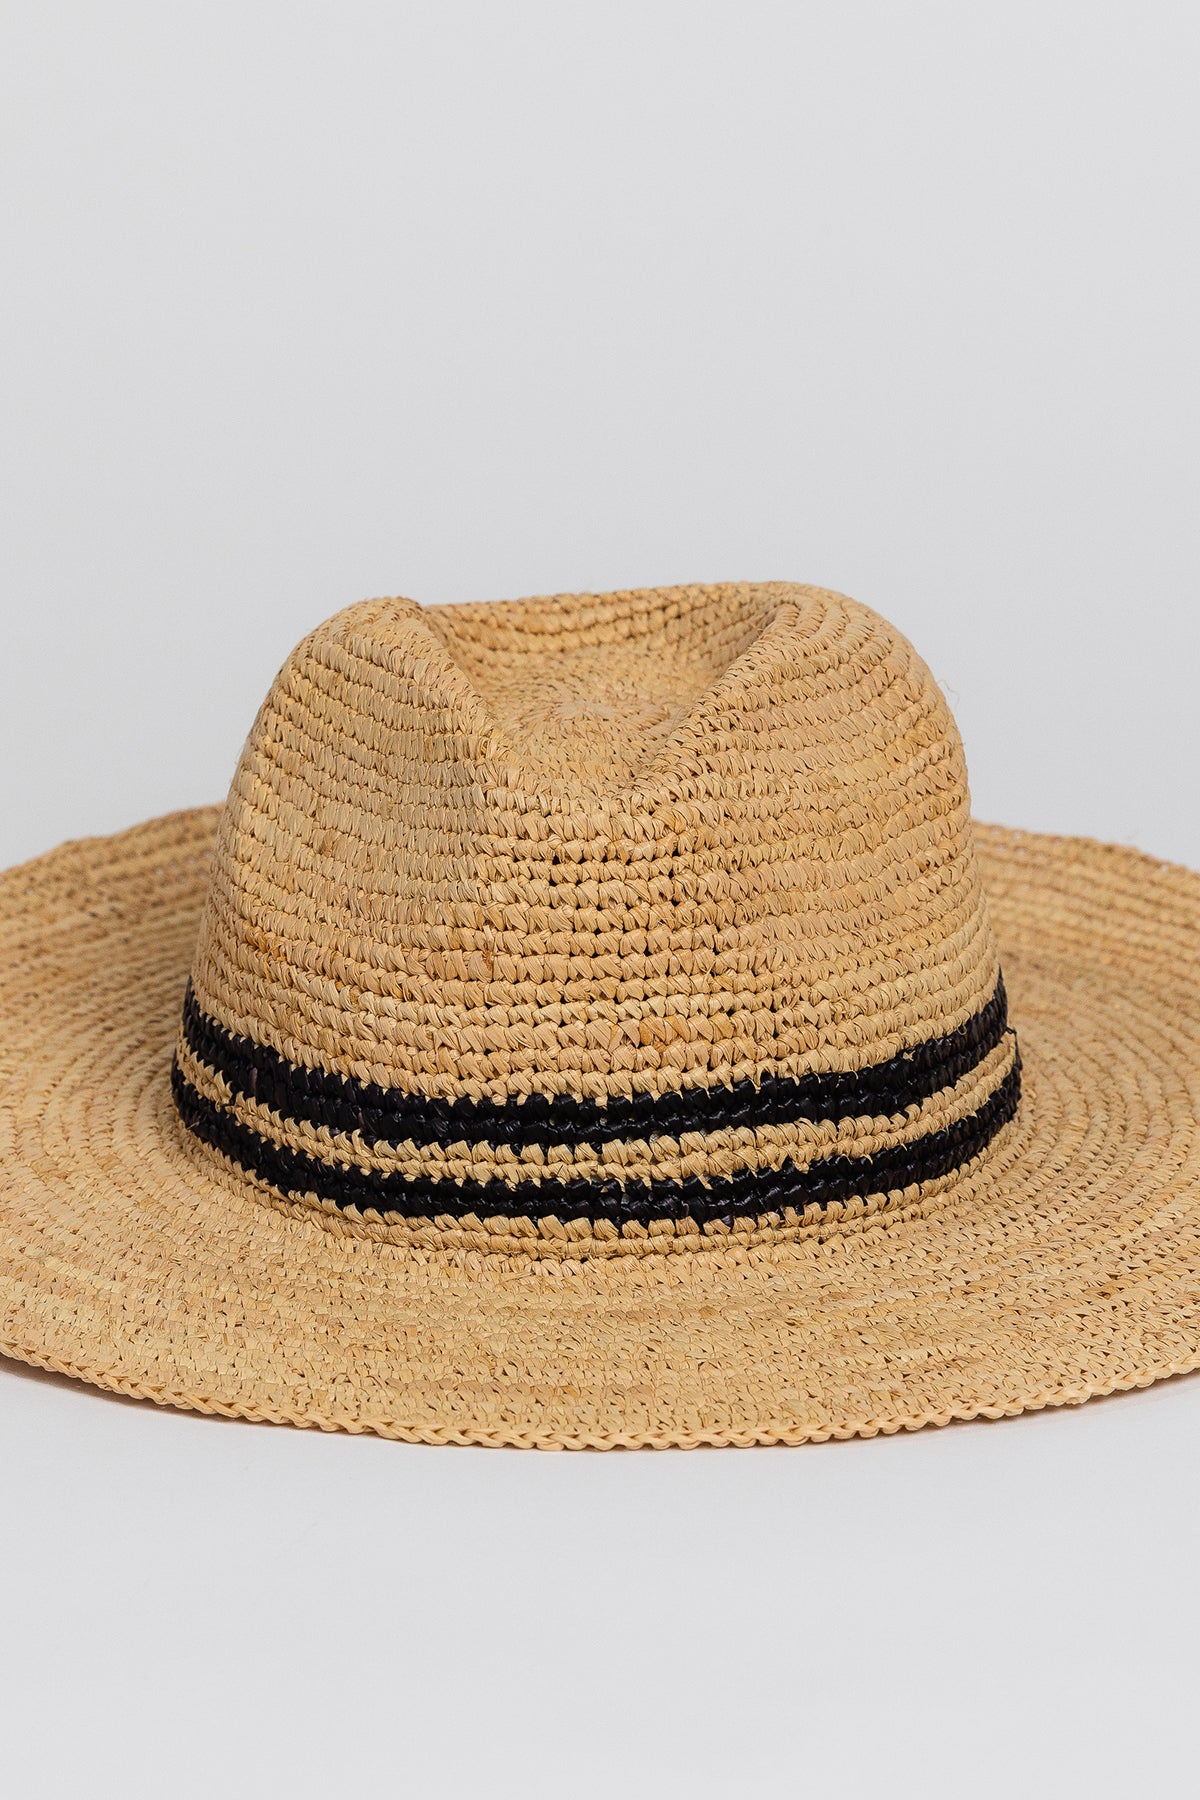   a SADONA RANCHER HAT by Velvet by Graham & Spencer with a black stripe. 